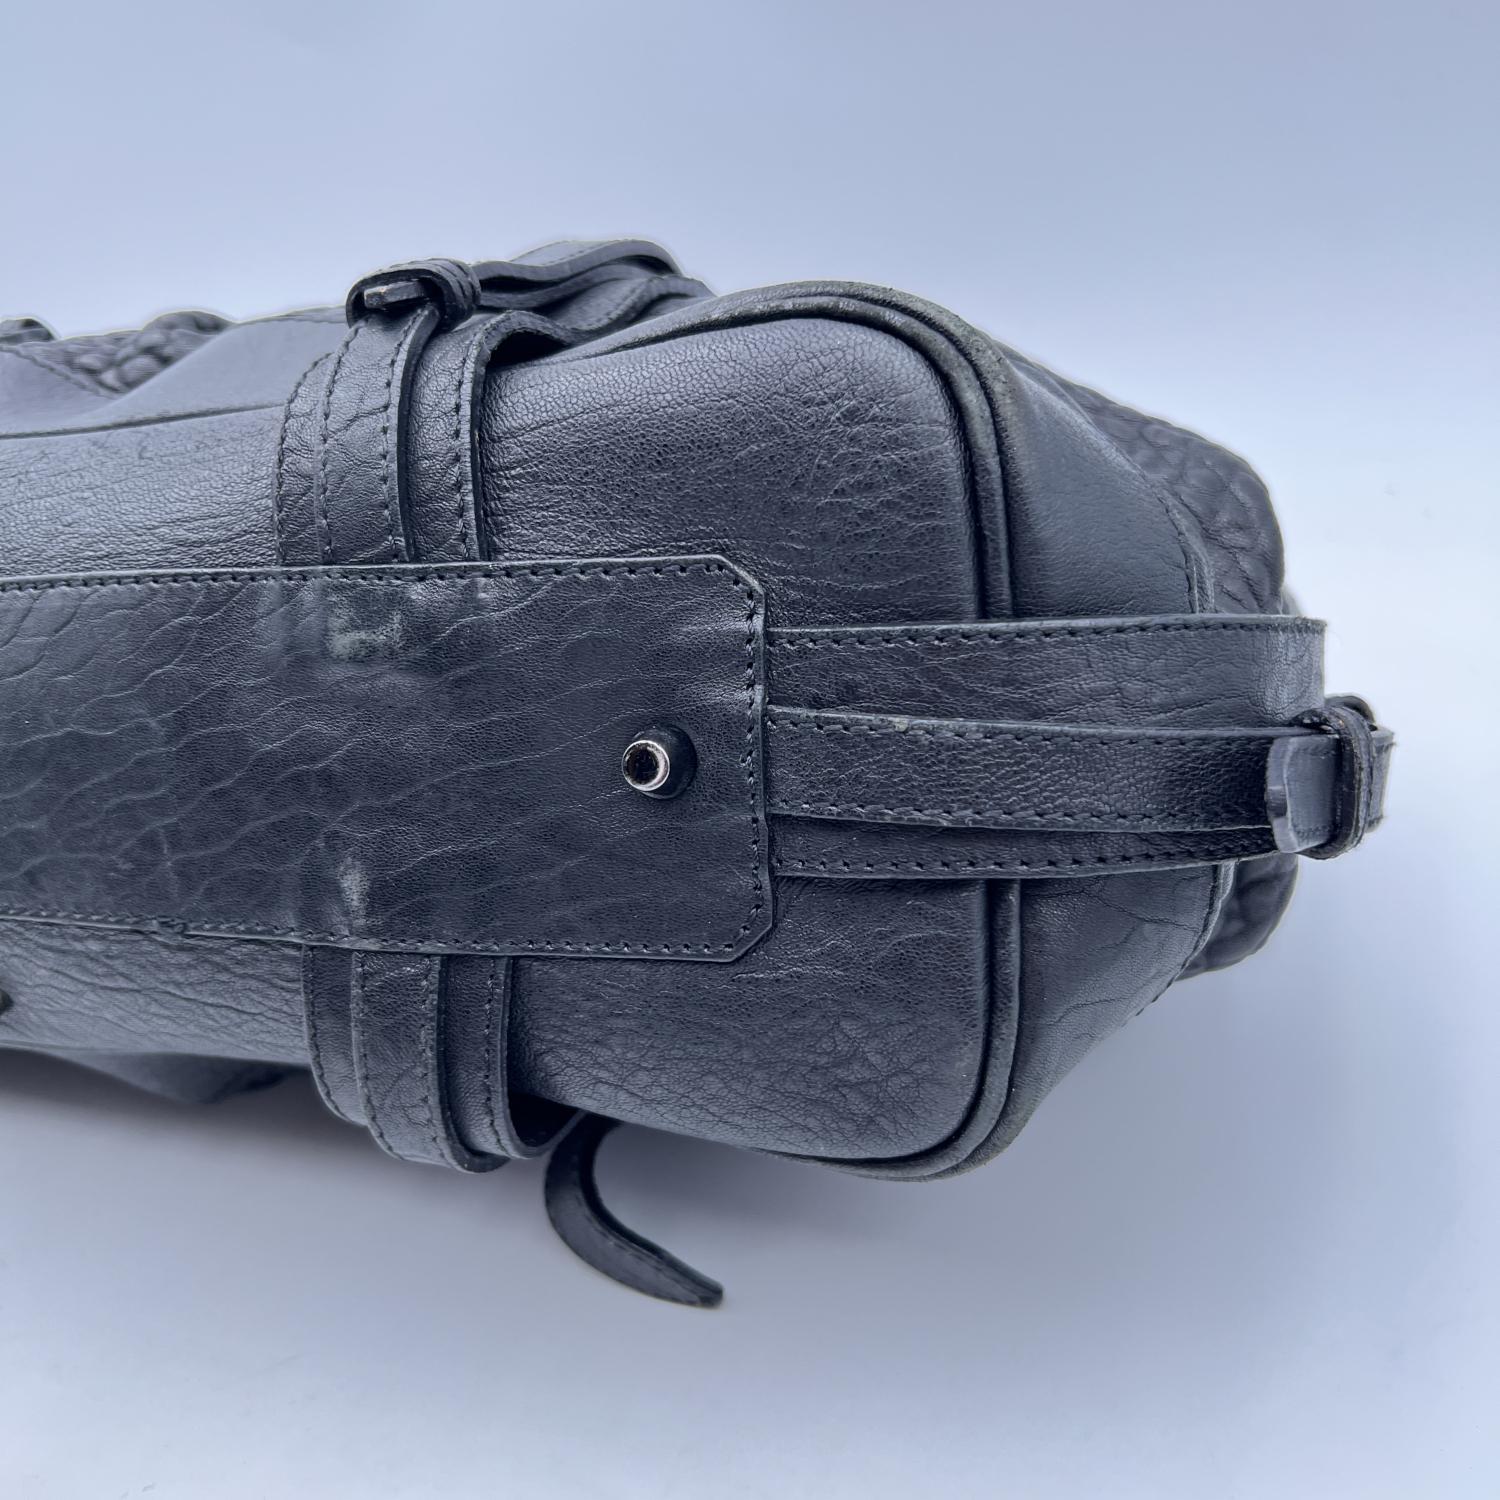 Burberry Black Leather Belted Rowan Tote Bag Satchel Handbag 2